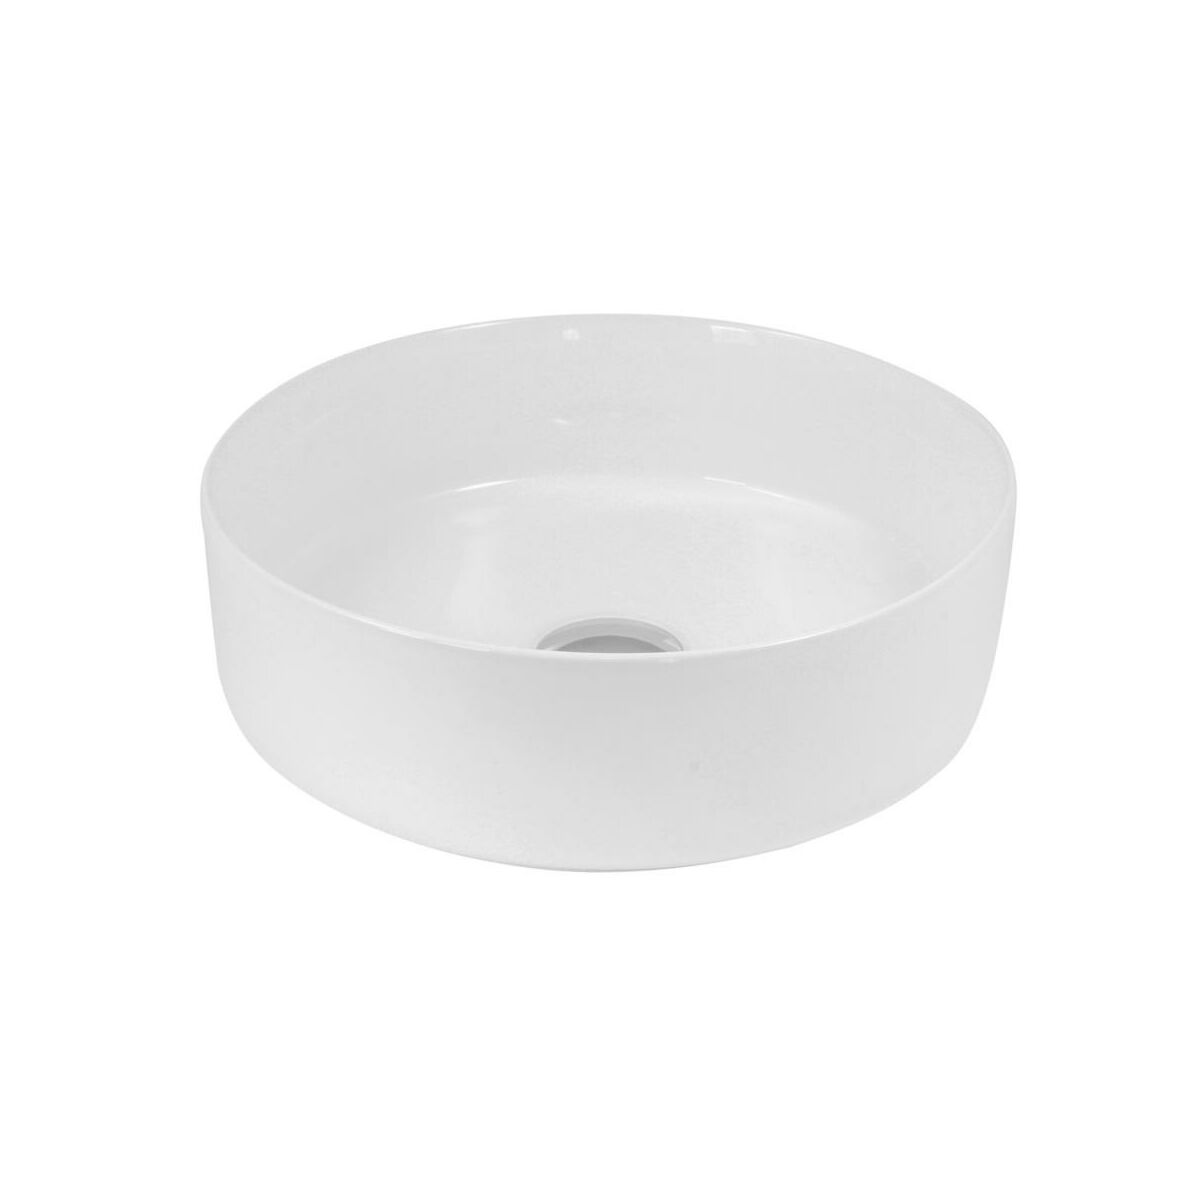 Umywalka ceramiczna Donata 35.5 x 35.5 Domino